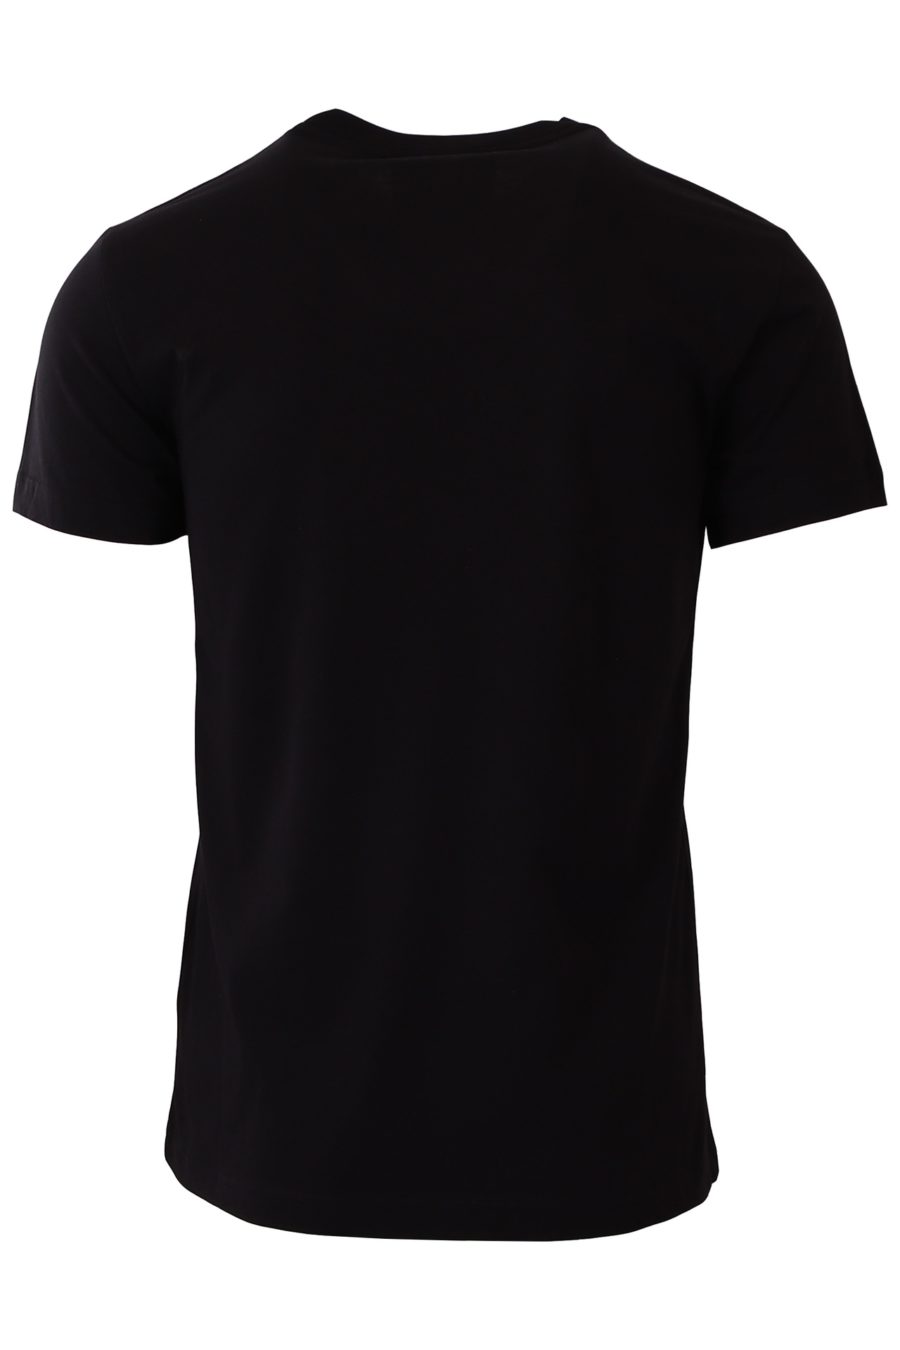 Camiseta Versace Jeans Couture negra con logo barroco dorado - 213793409d347ae7fd7e4aa4f36d69da6f7f15e3